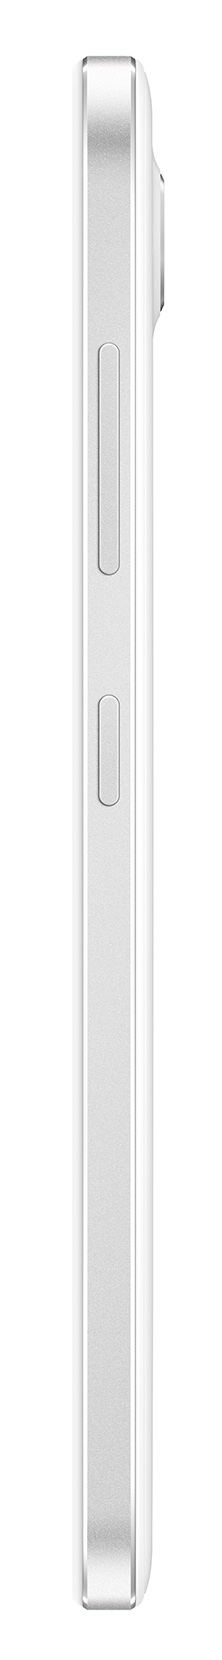 Microsoft Lumia 650 warna Putih samping